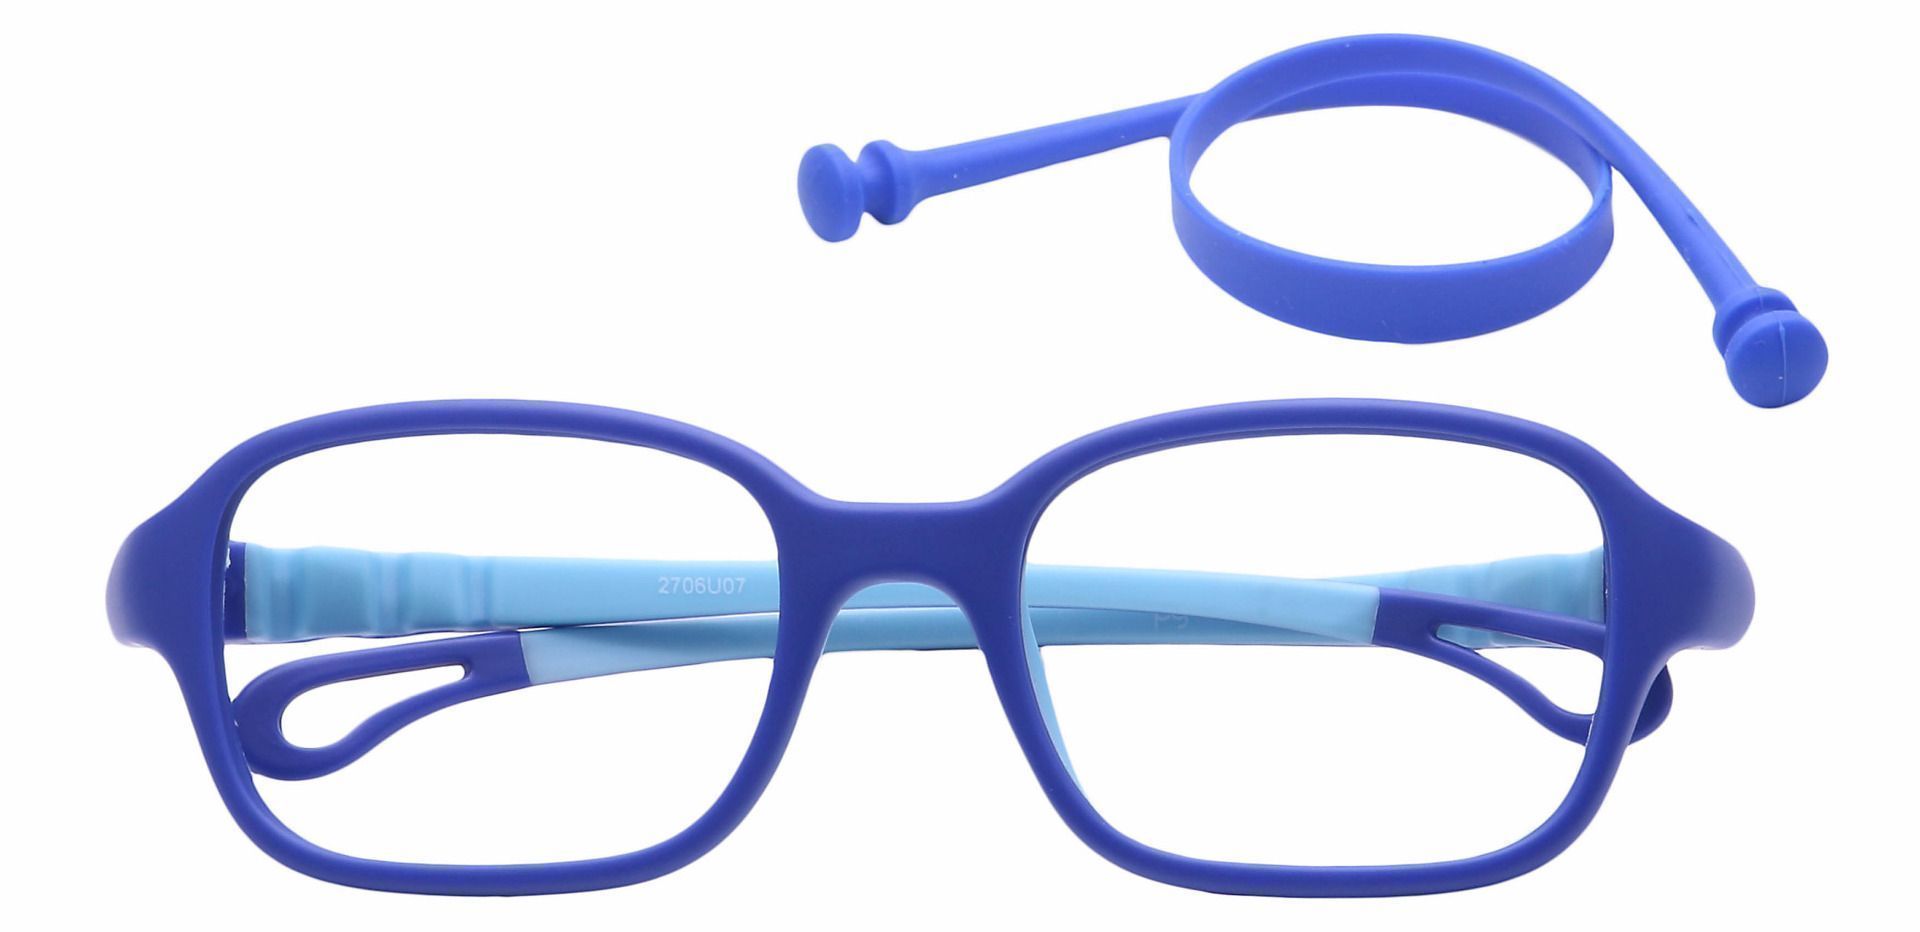 City Rectangle Reading Glasses - Blue